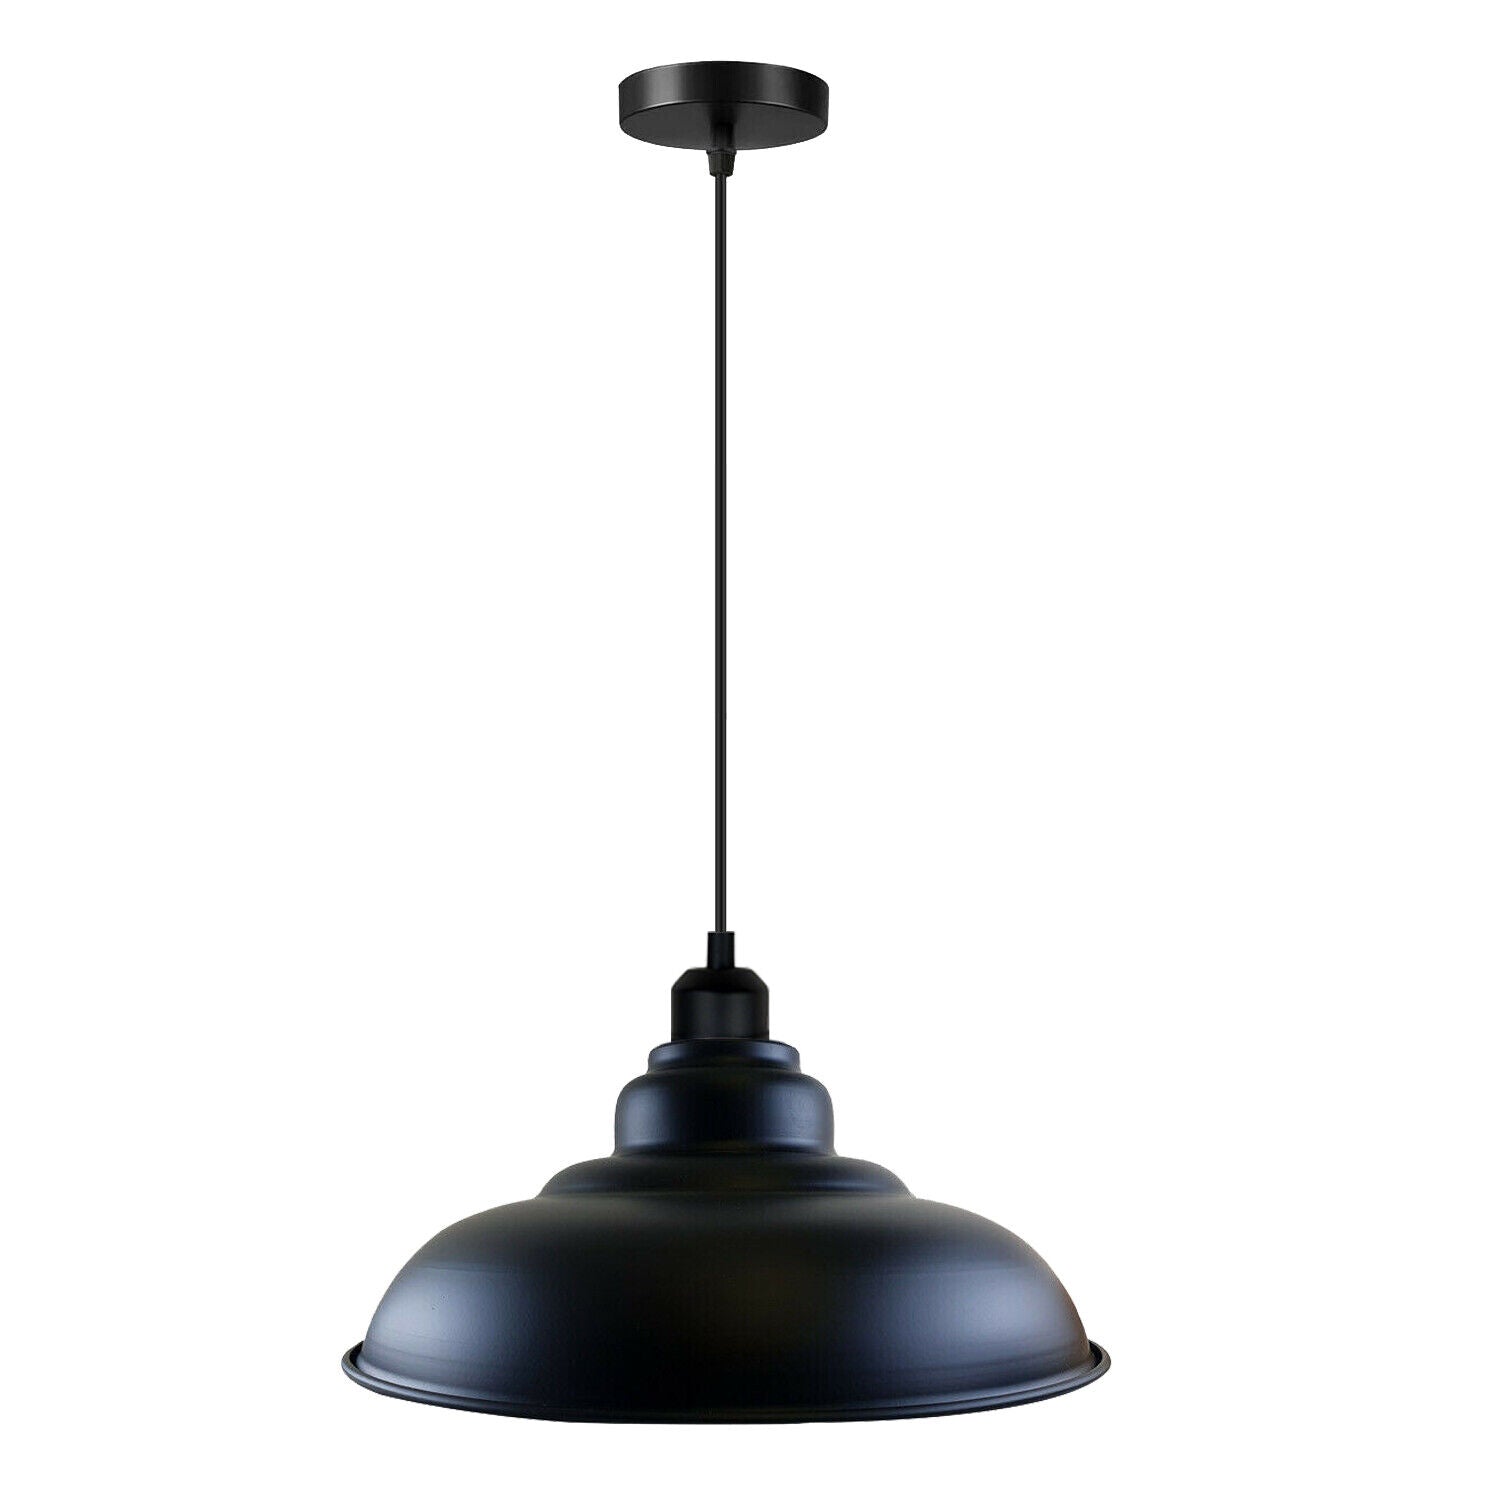 LEDSone industrial Vintage  32cm  Black Pendant Retro Metal Lamp Shade E27 Uk Holder~3691 - LEDSone UK Ltd